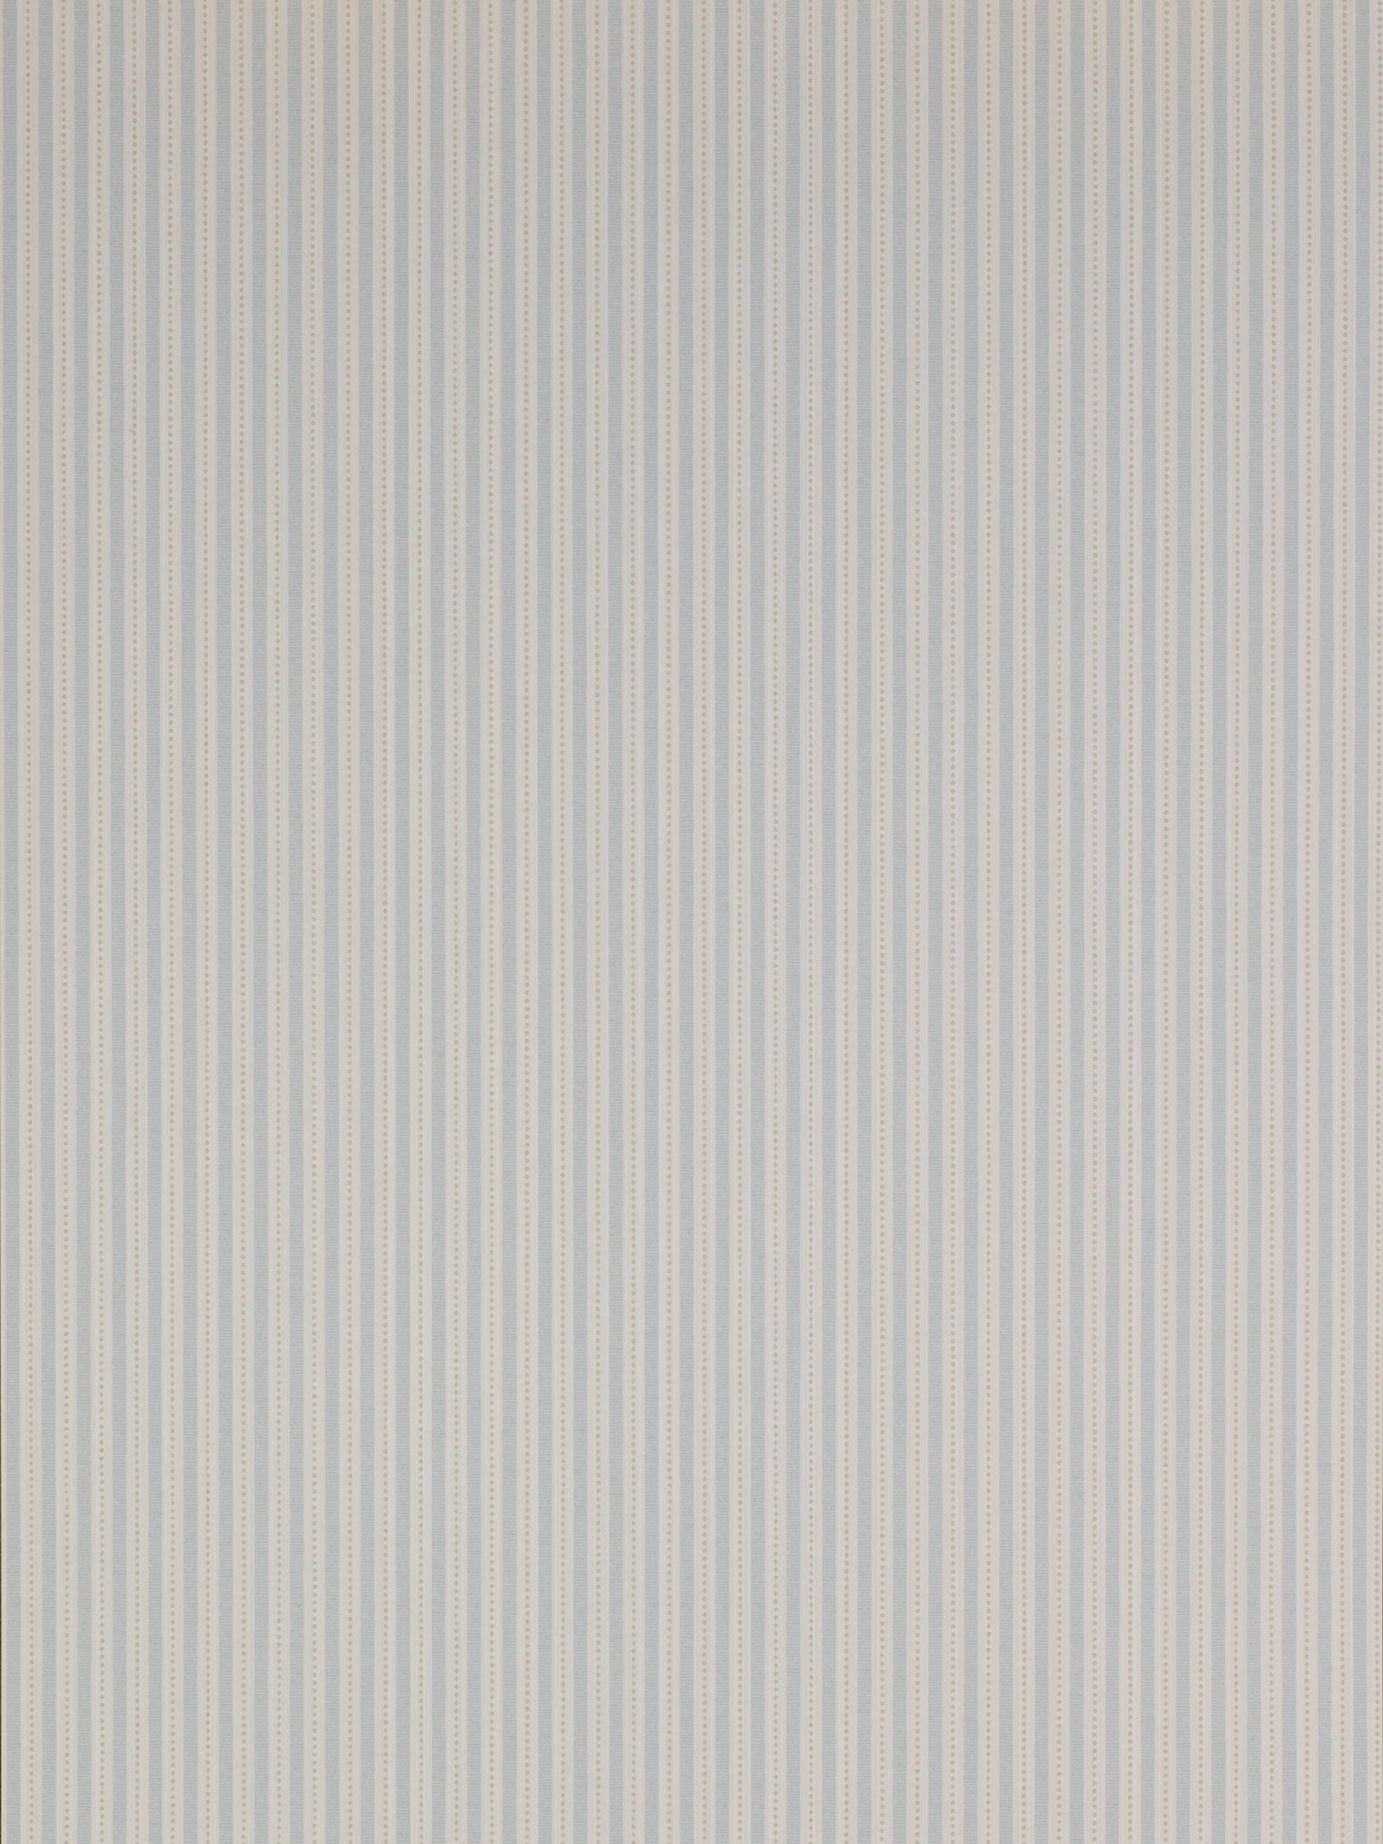 Colefax and Fowler Ditton Stripe Wallpaper